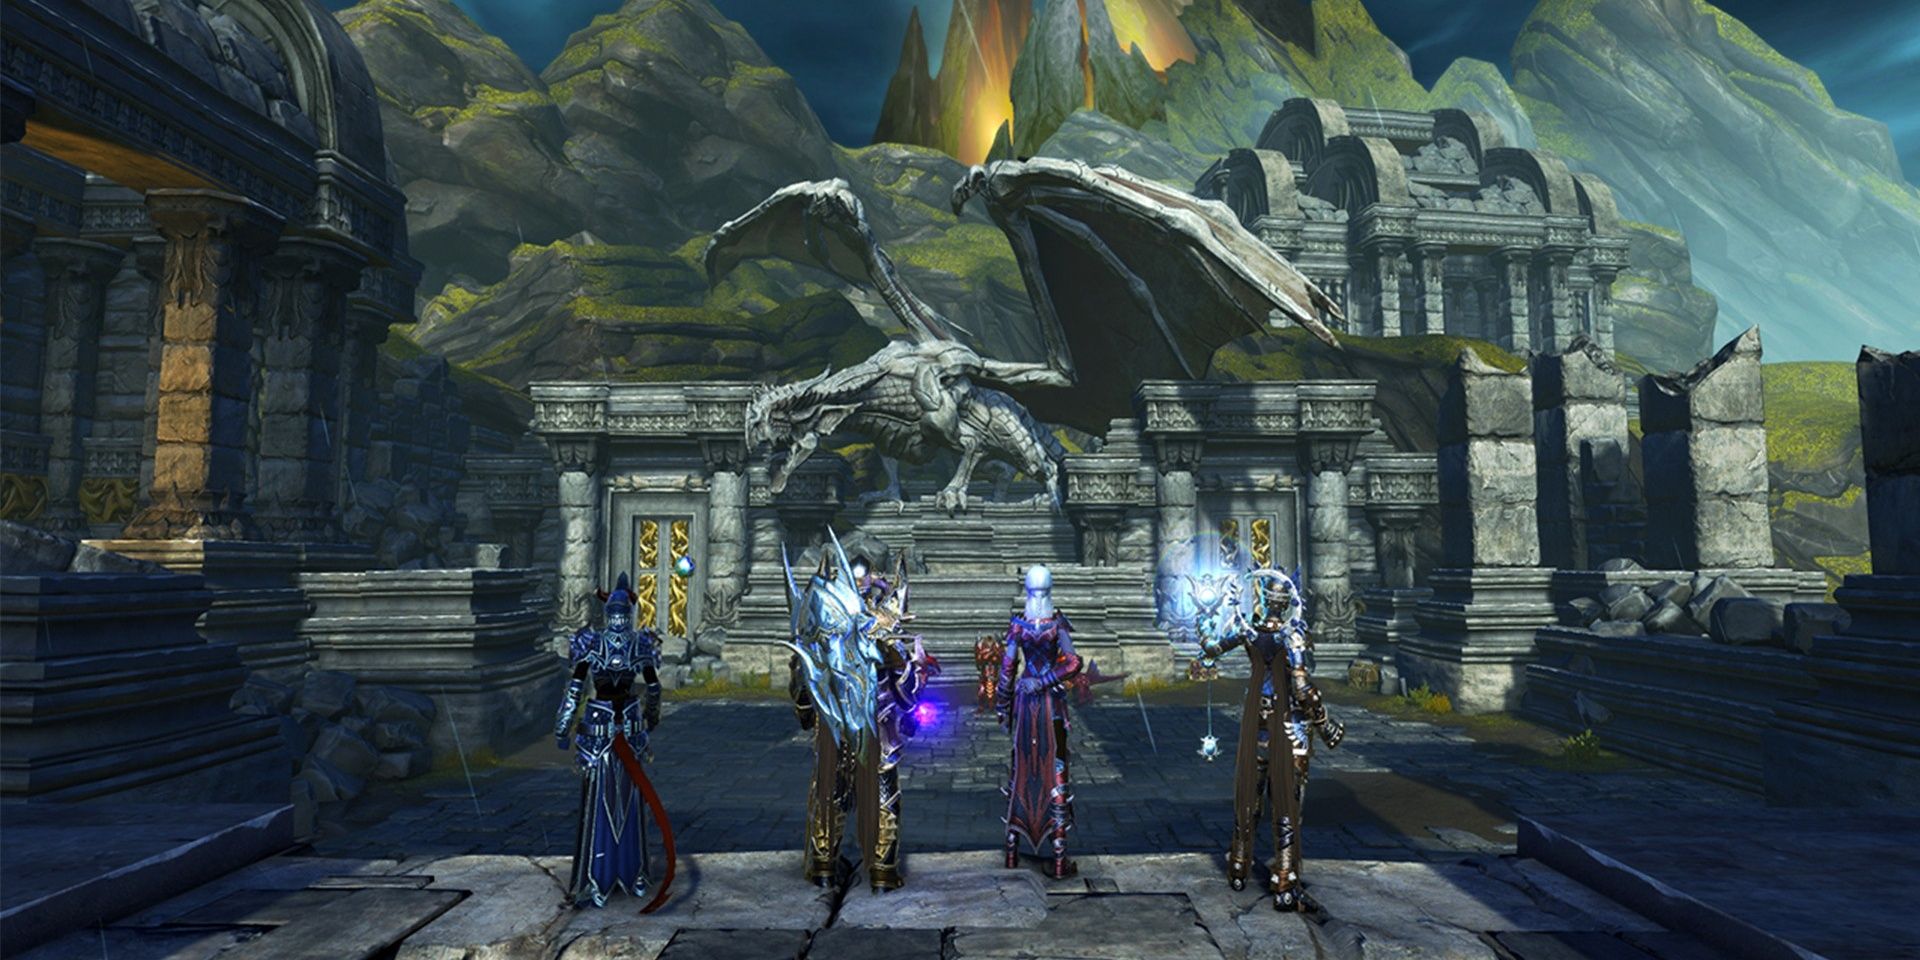 four fantasy adventurers face towards a stone dragon